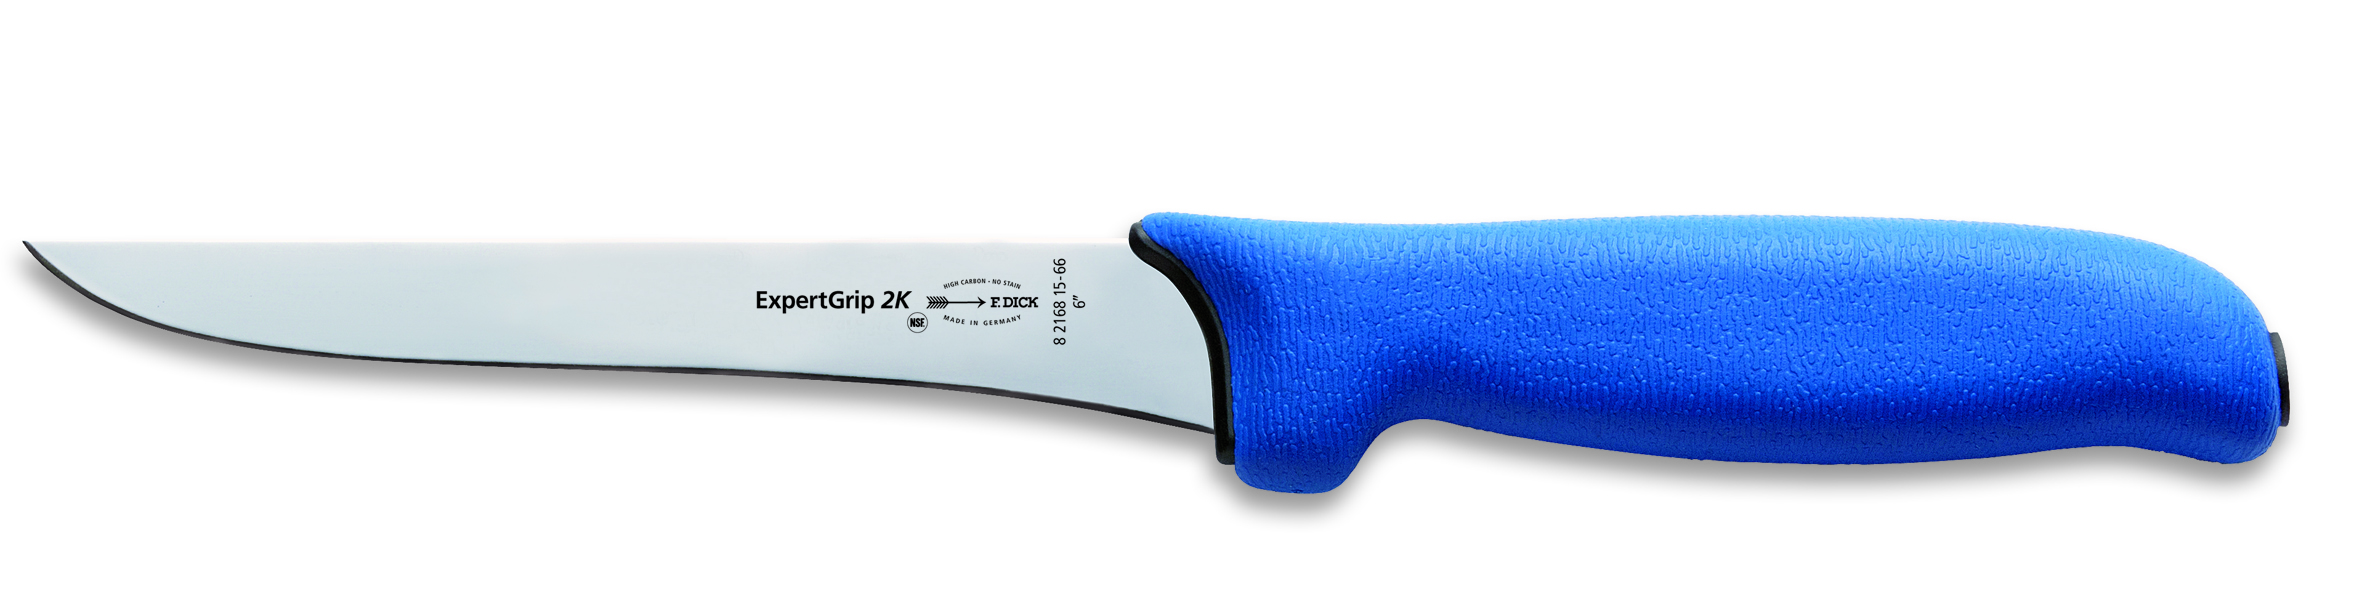 Ausbeinmesser, Dick, 15 cm, ExpertGrip 2K steif gerade blauer Griff, Auslösemesser, Zerwirkmesser, K